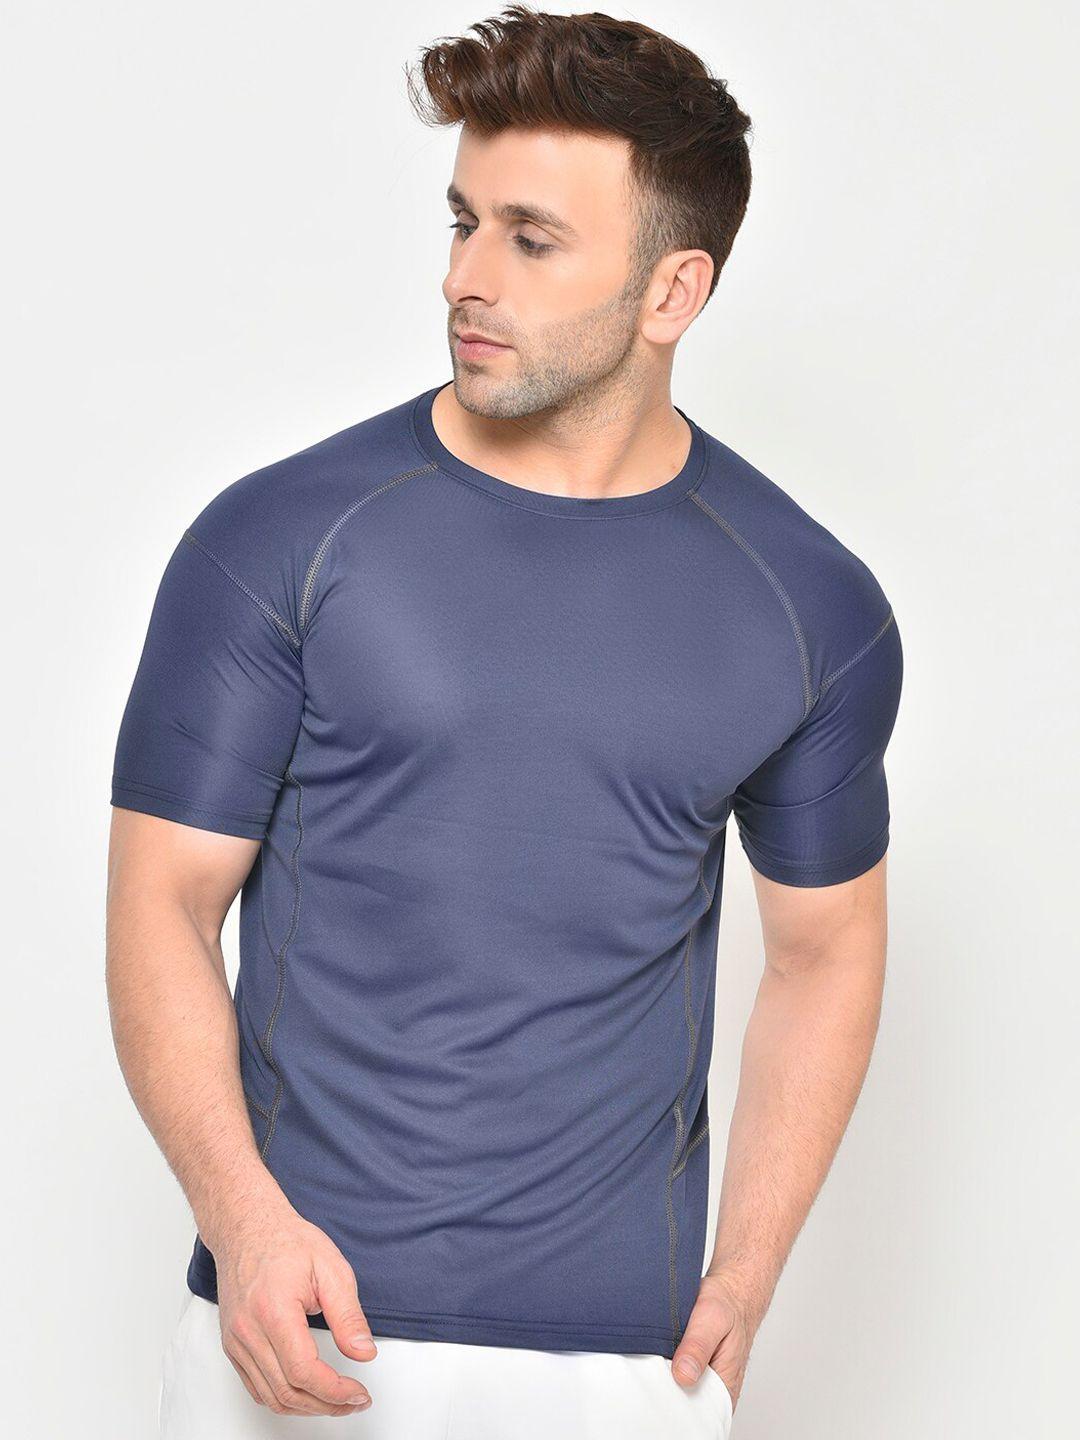 chkokko men navy blue solid round neck sports t-shirt